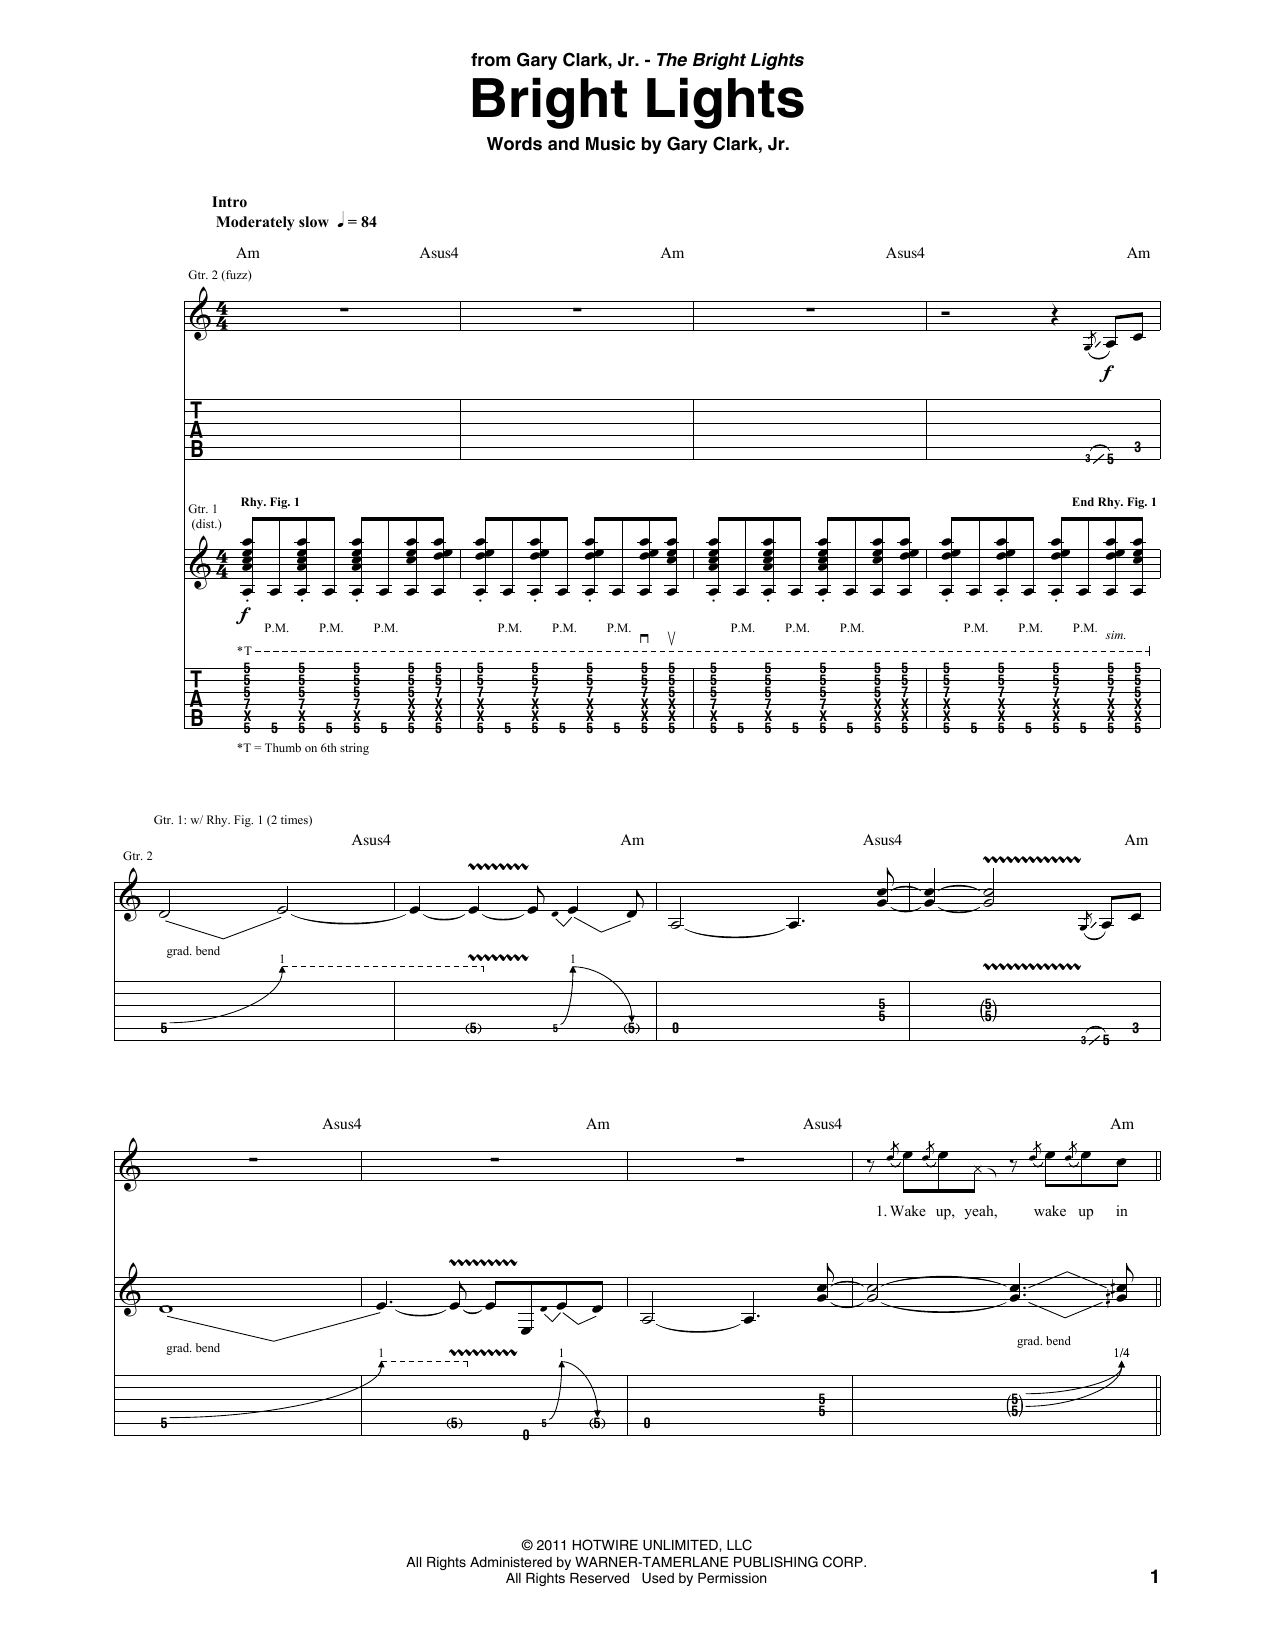 Gary Clark, Jr. Bright Lights Sheet Music Notes & Chords for Guitar Tab - Download or Print PDF